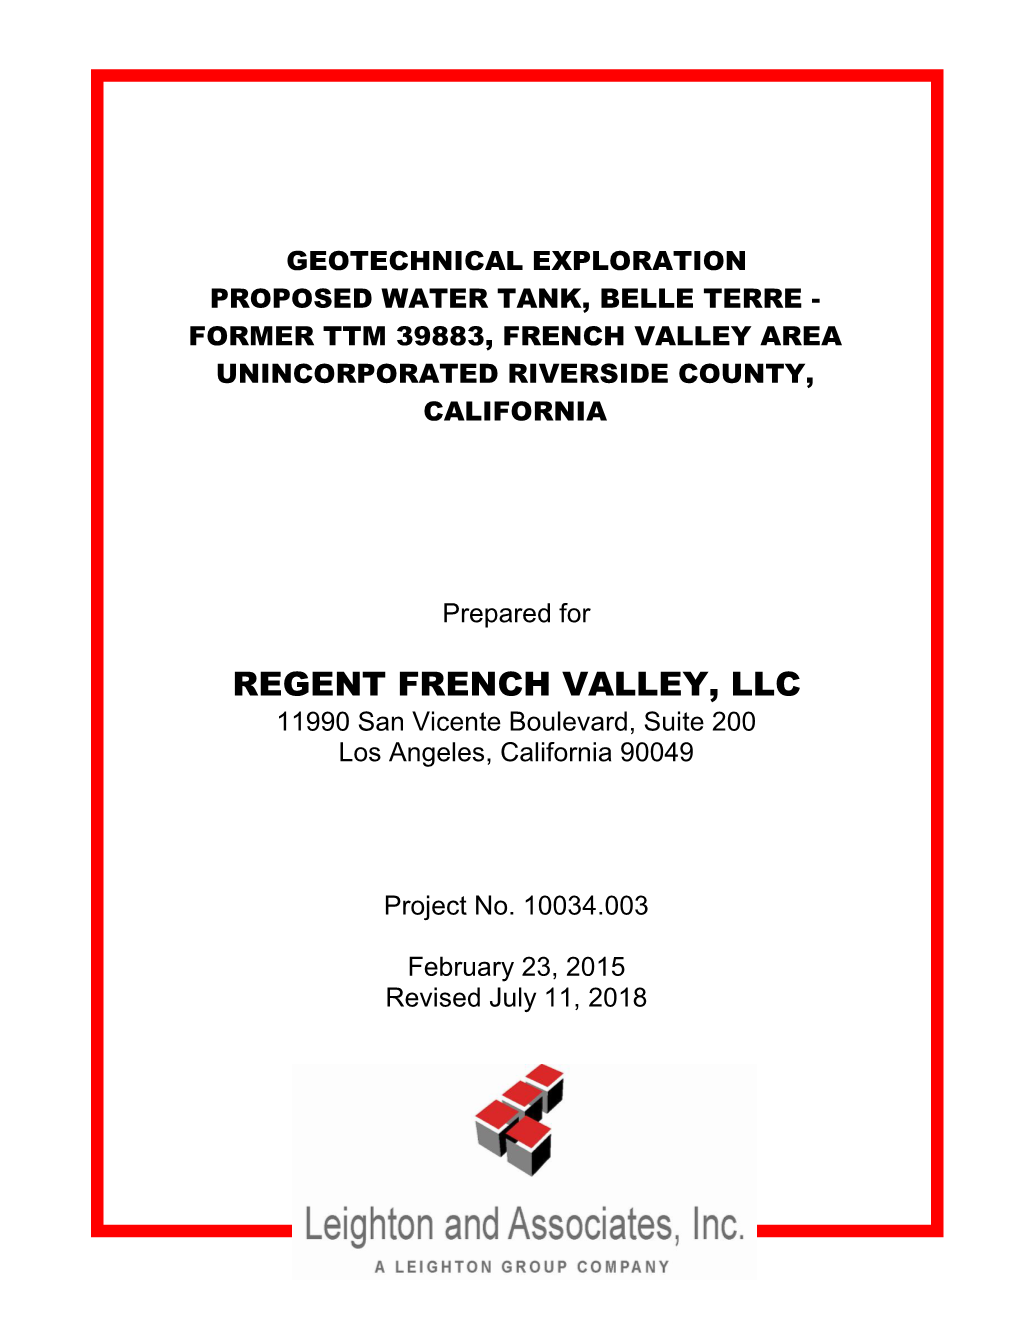 REGENT FRENCH VALLEY, LLC 11990 San Vicente Boulevard, Suite 200 Los Angeles, California 90049